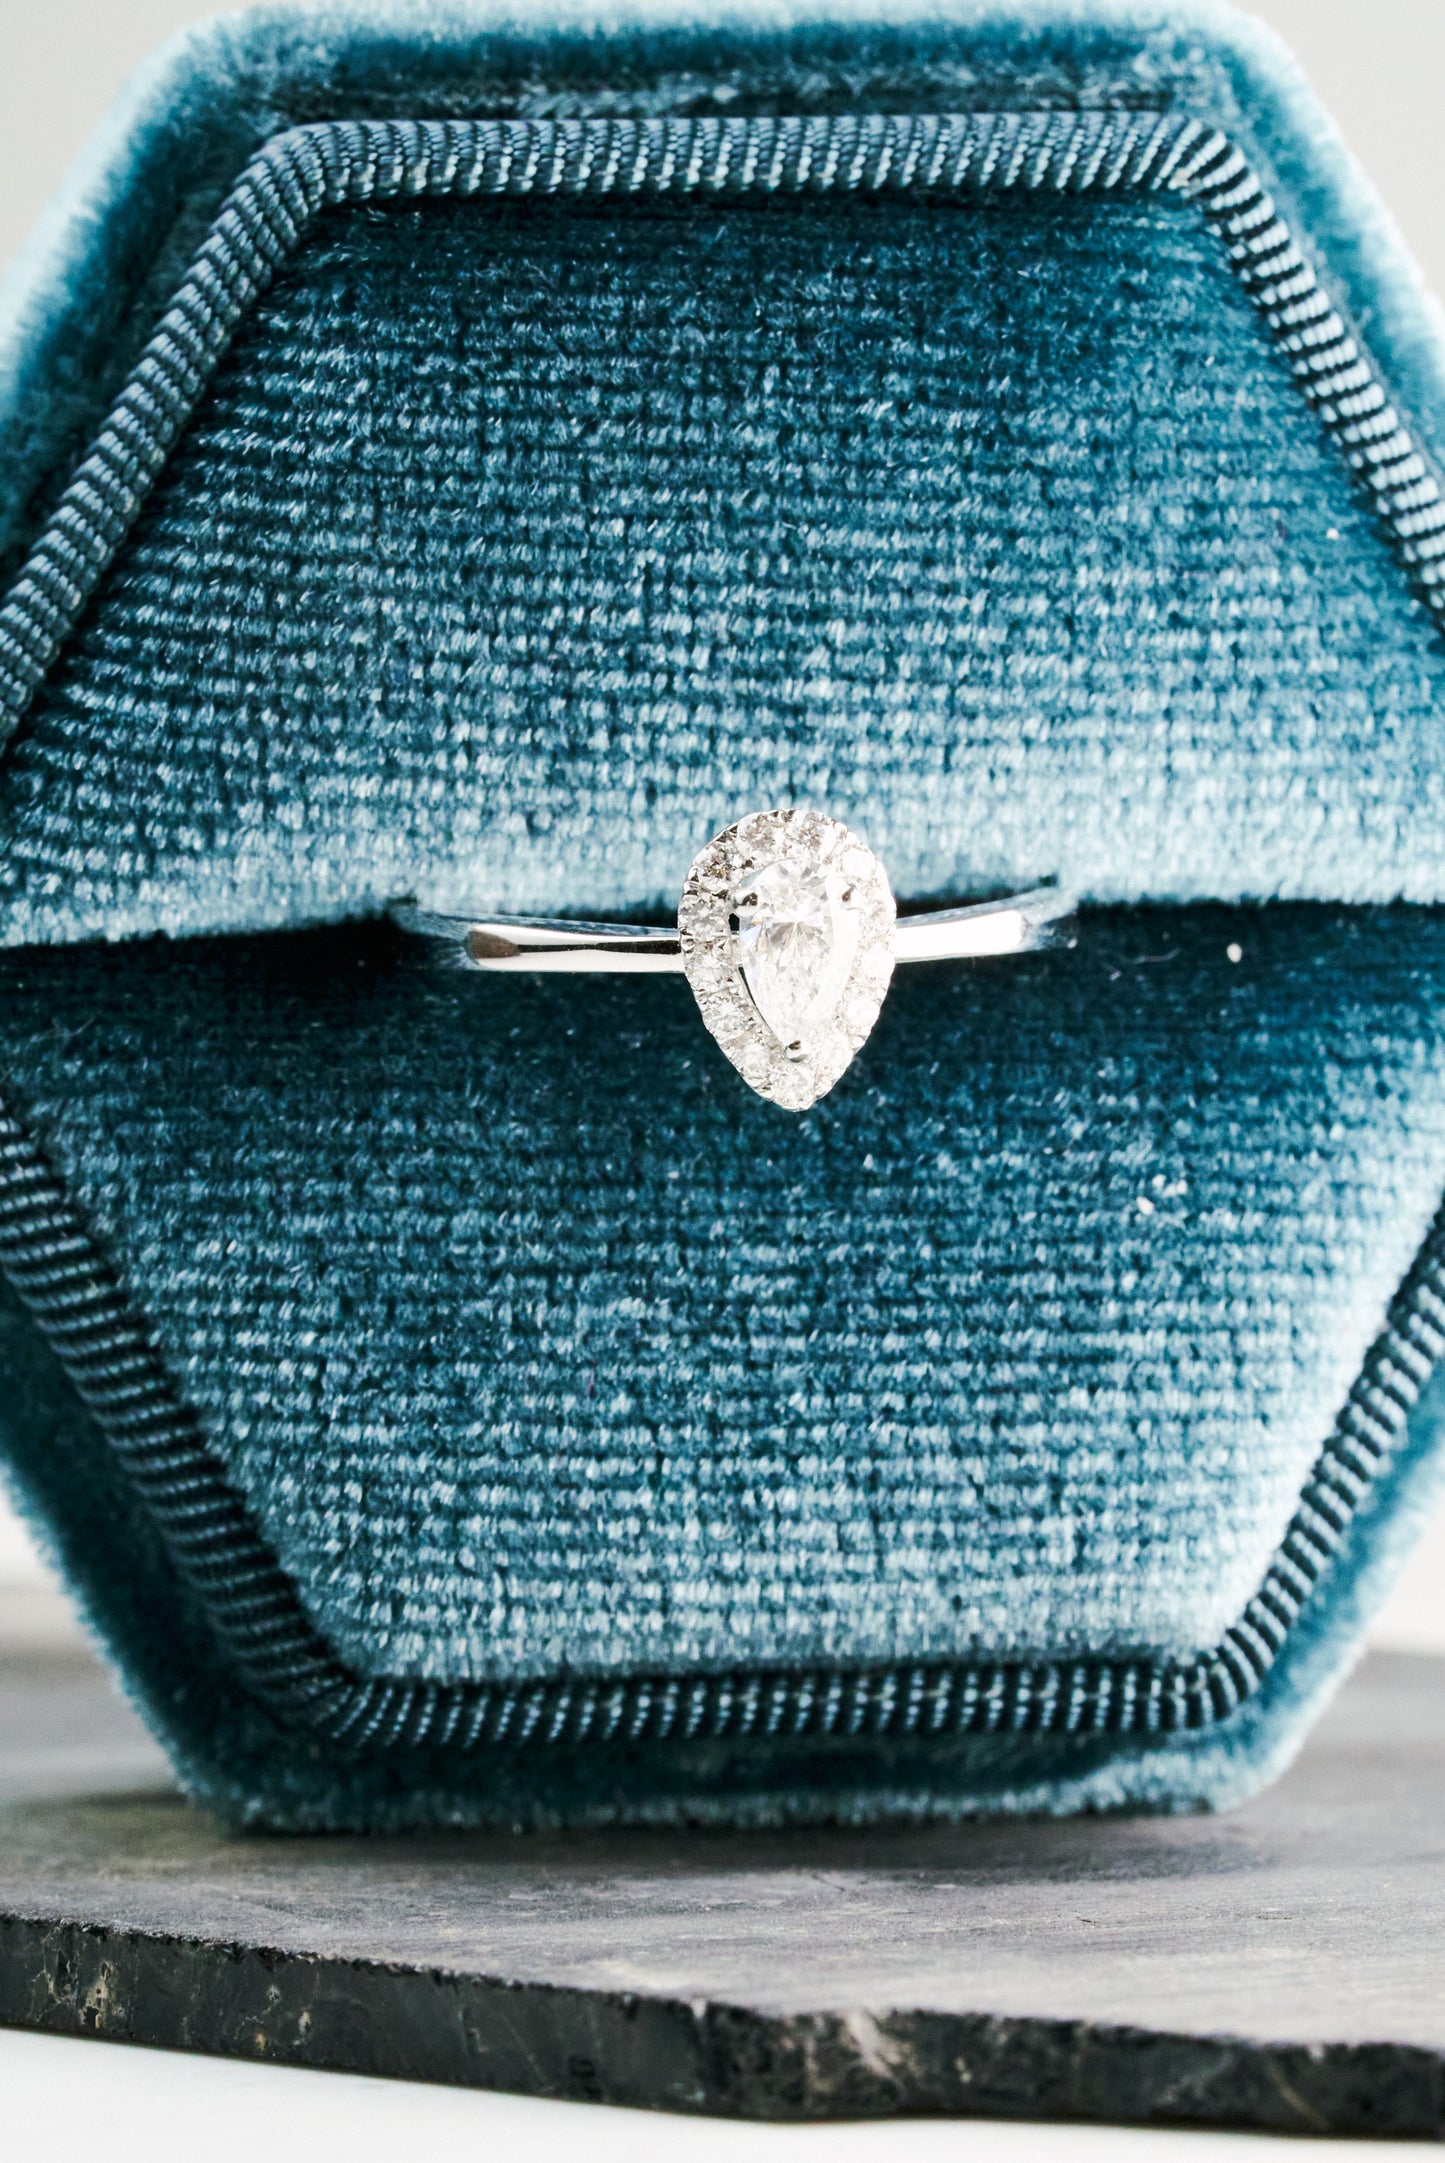 Verbena Halo Engagement Ring with Quarter-carat Pear-cut Diamond